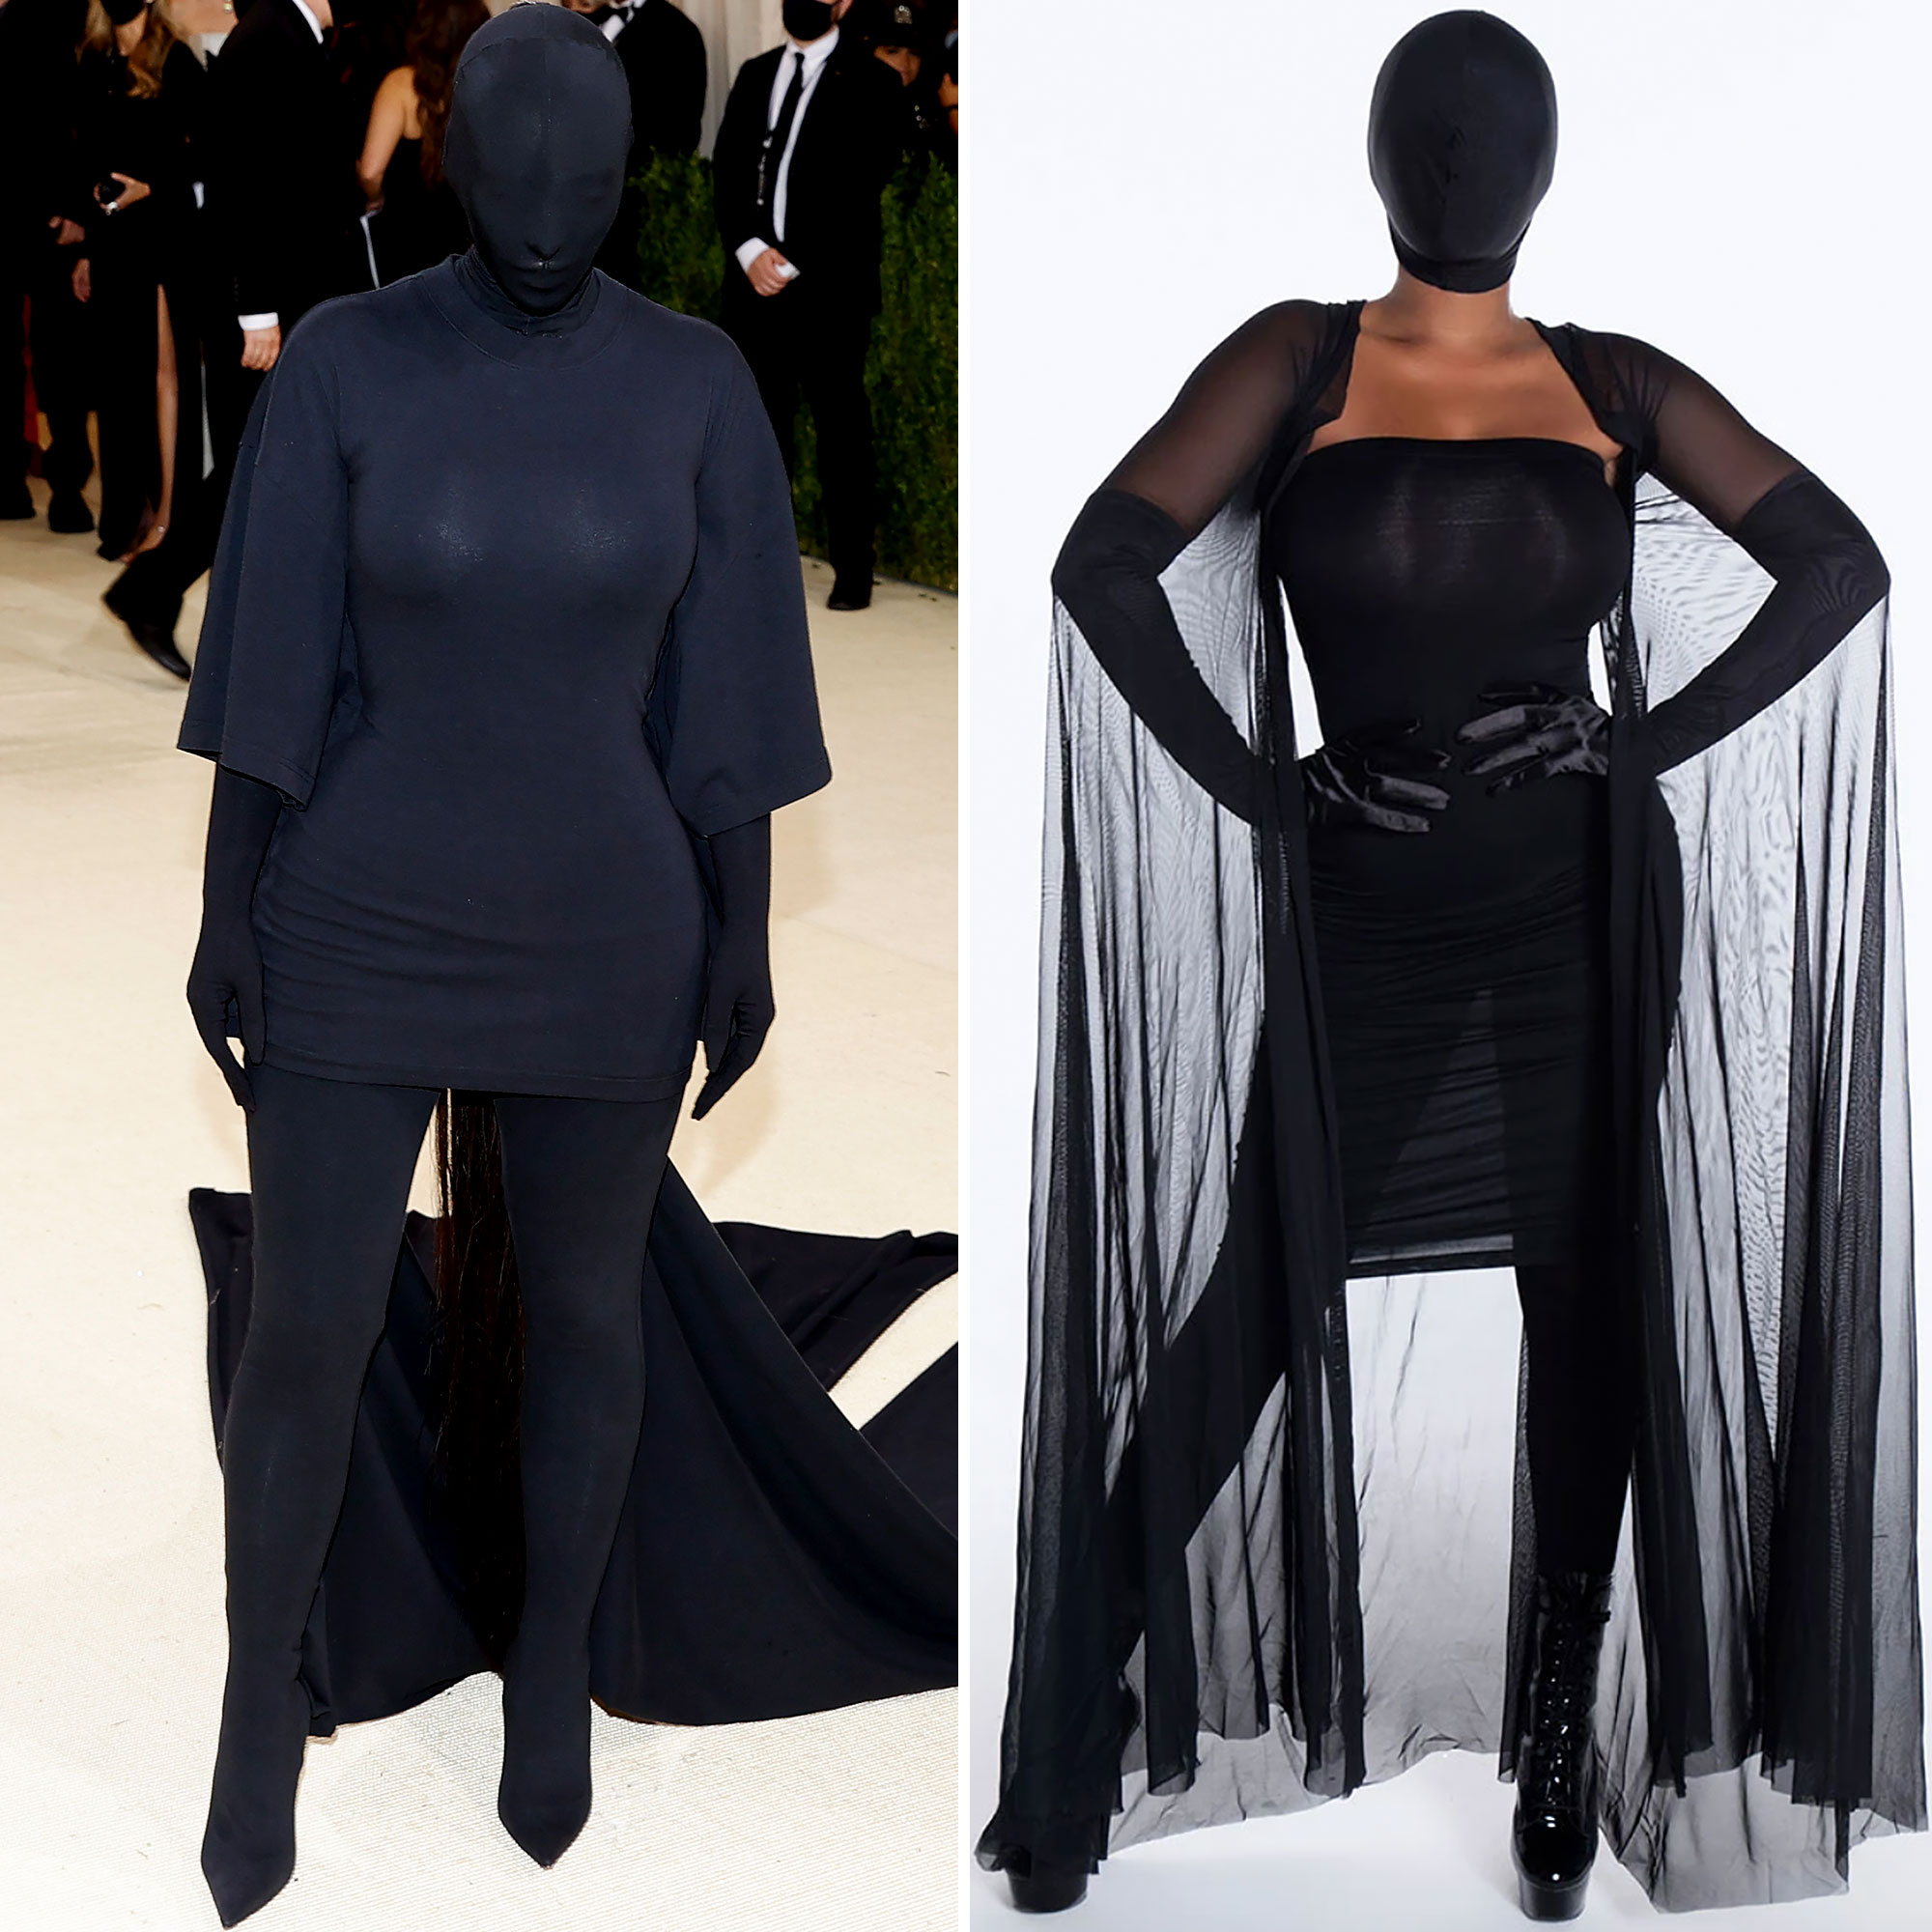 Kim Kardashian's Latest All-Black Outfit Has a Unique Detail